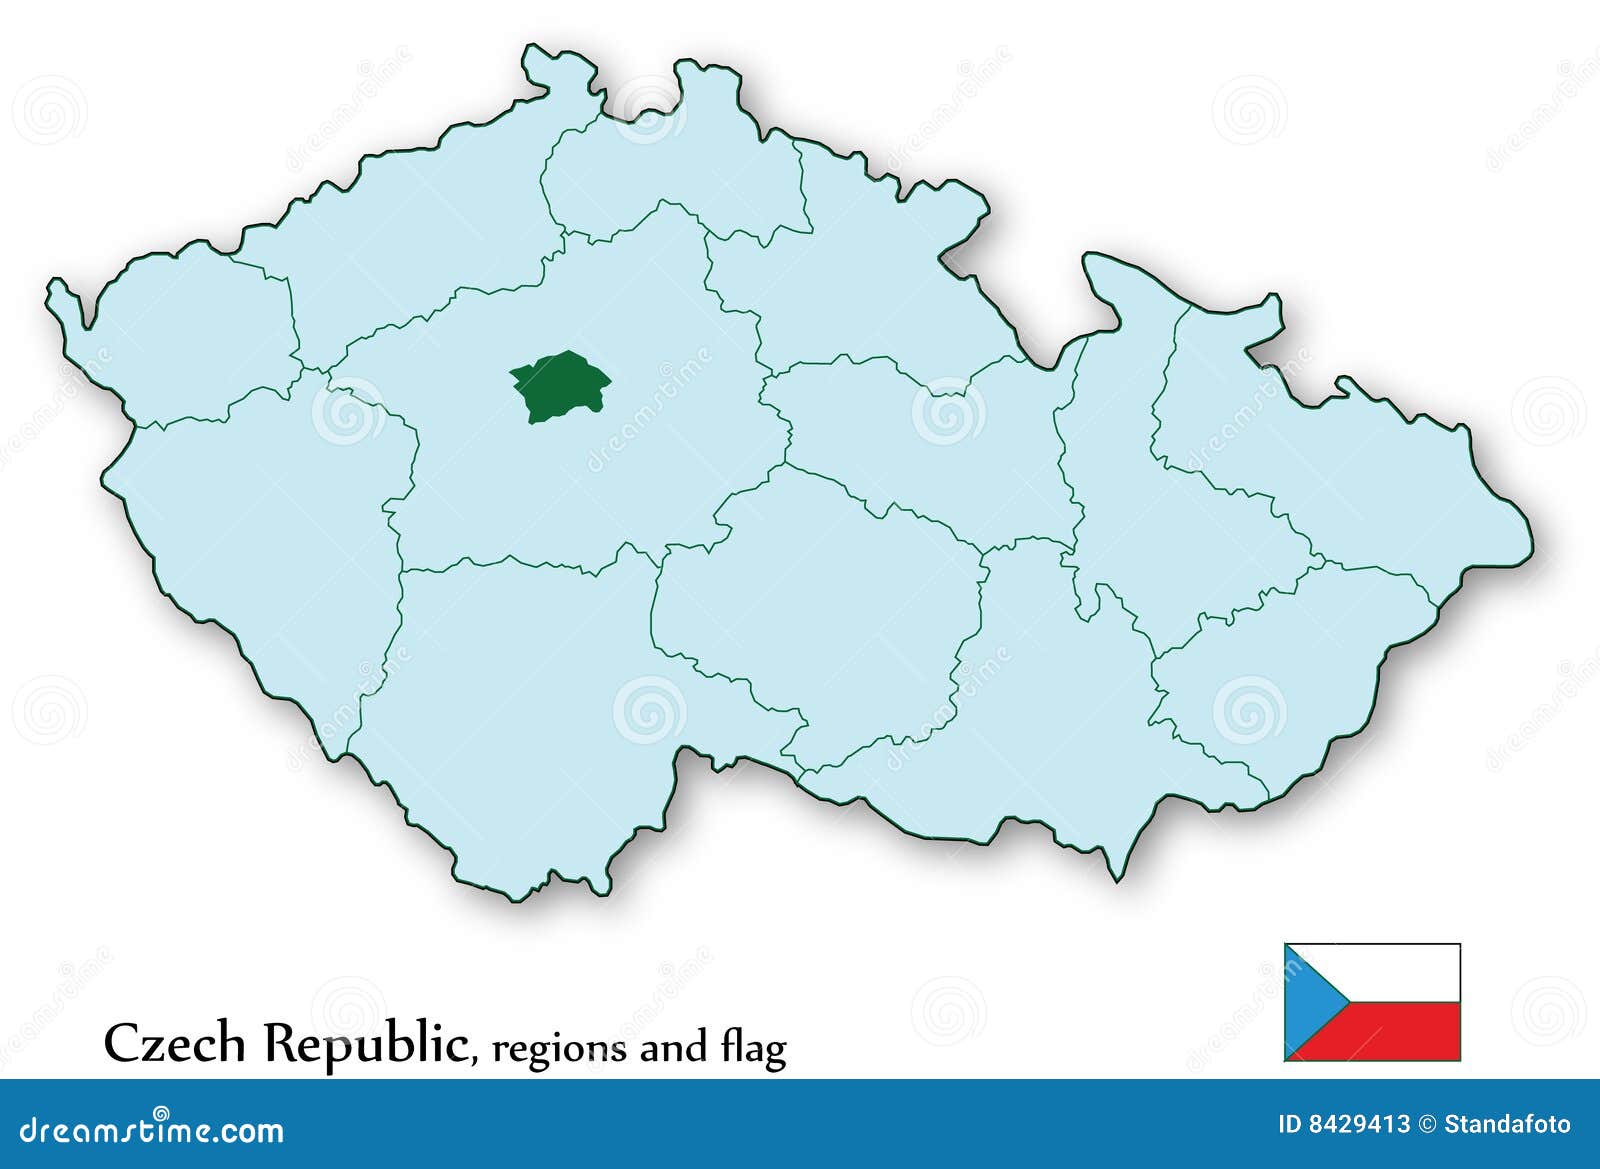 czech republic and all regions in s